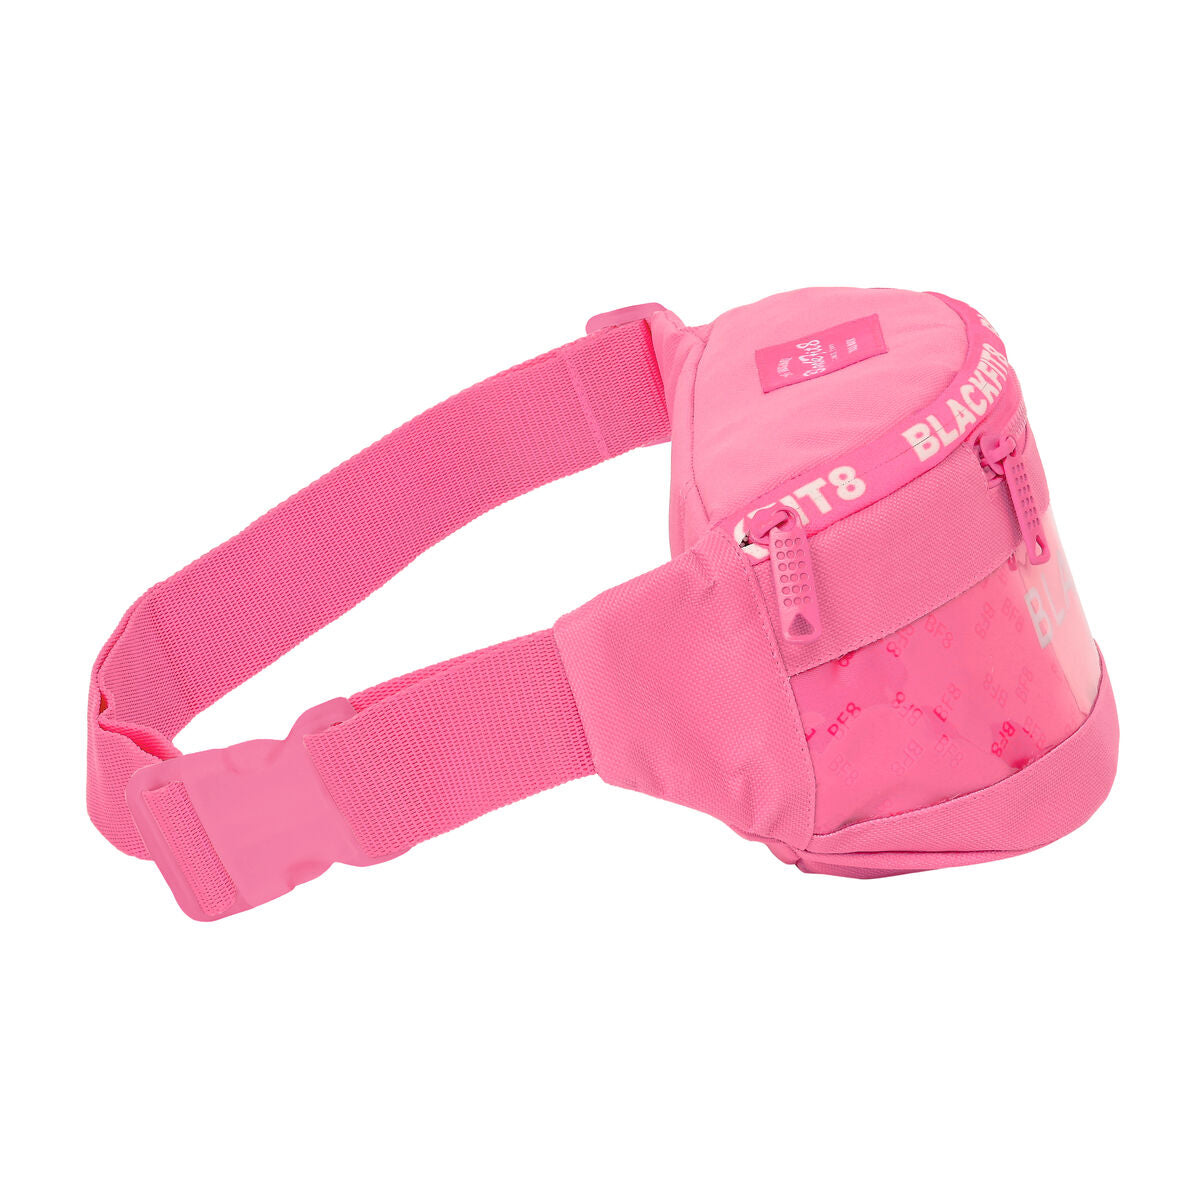 Belt Pouch BlackFit8 Glow up Pink (23 x 12 x 9 cm)